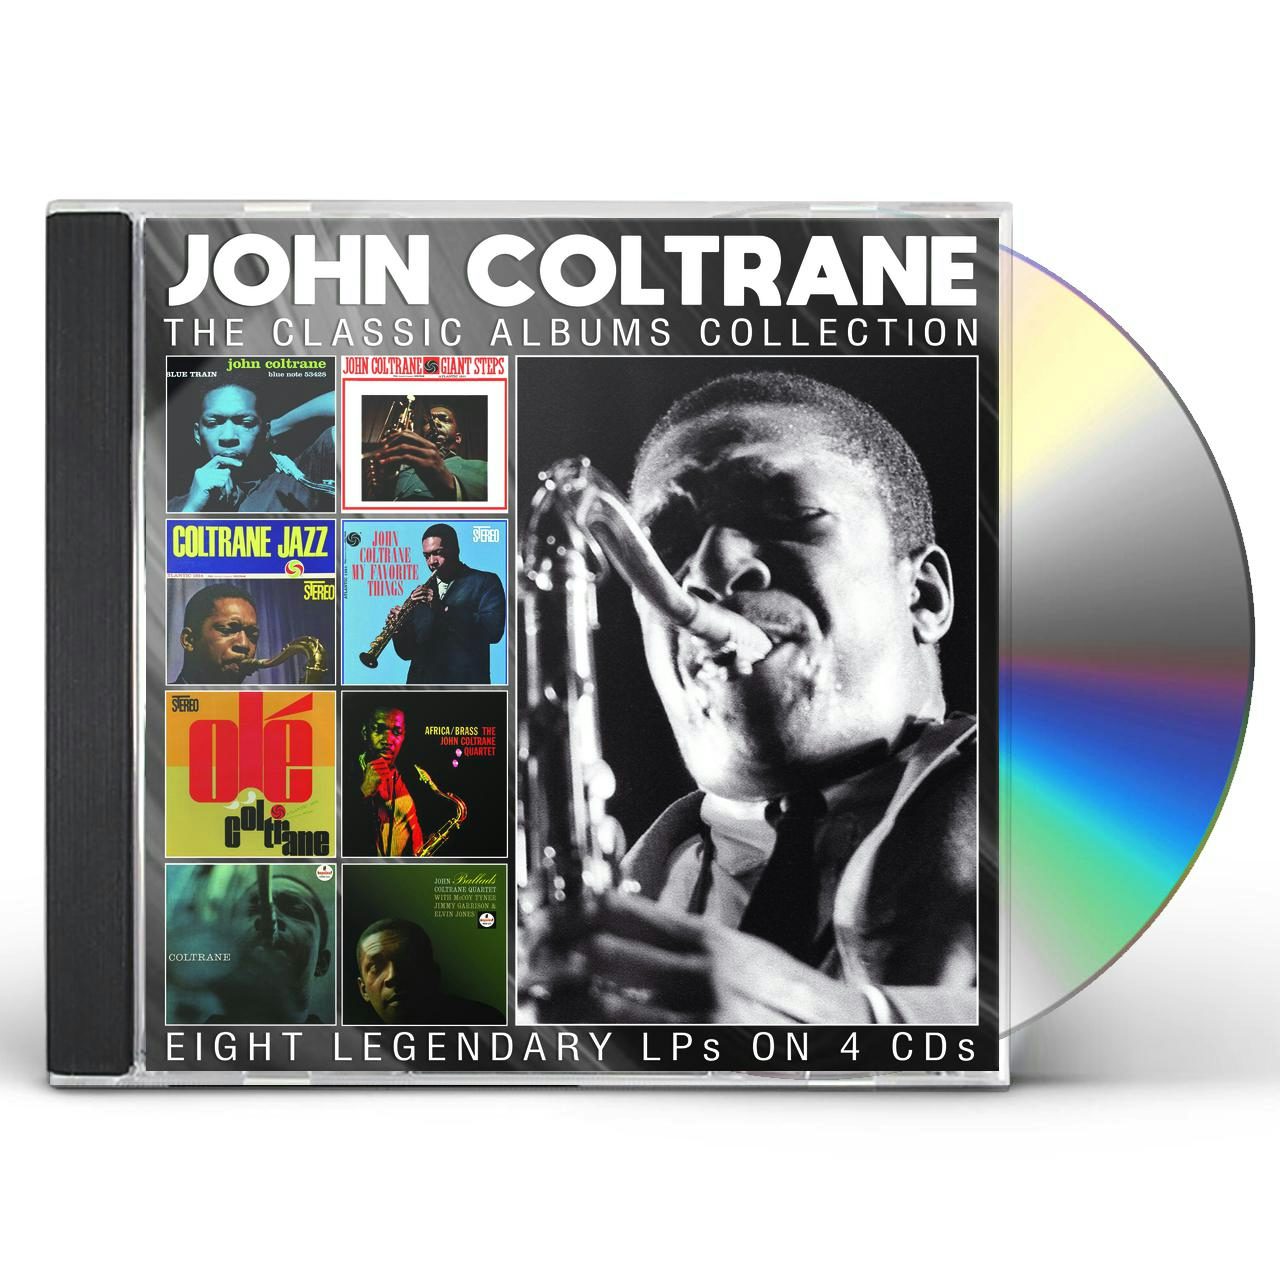 John Coltrane CLASSIC ALBUMS COLLECTION CD